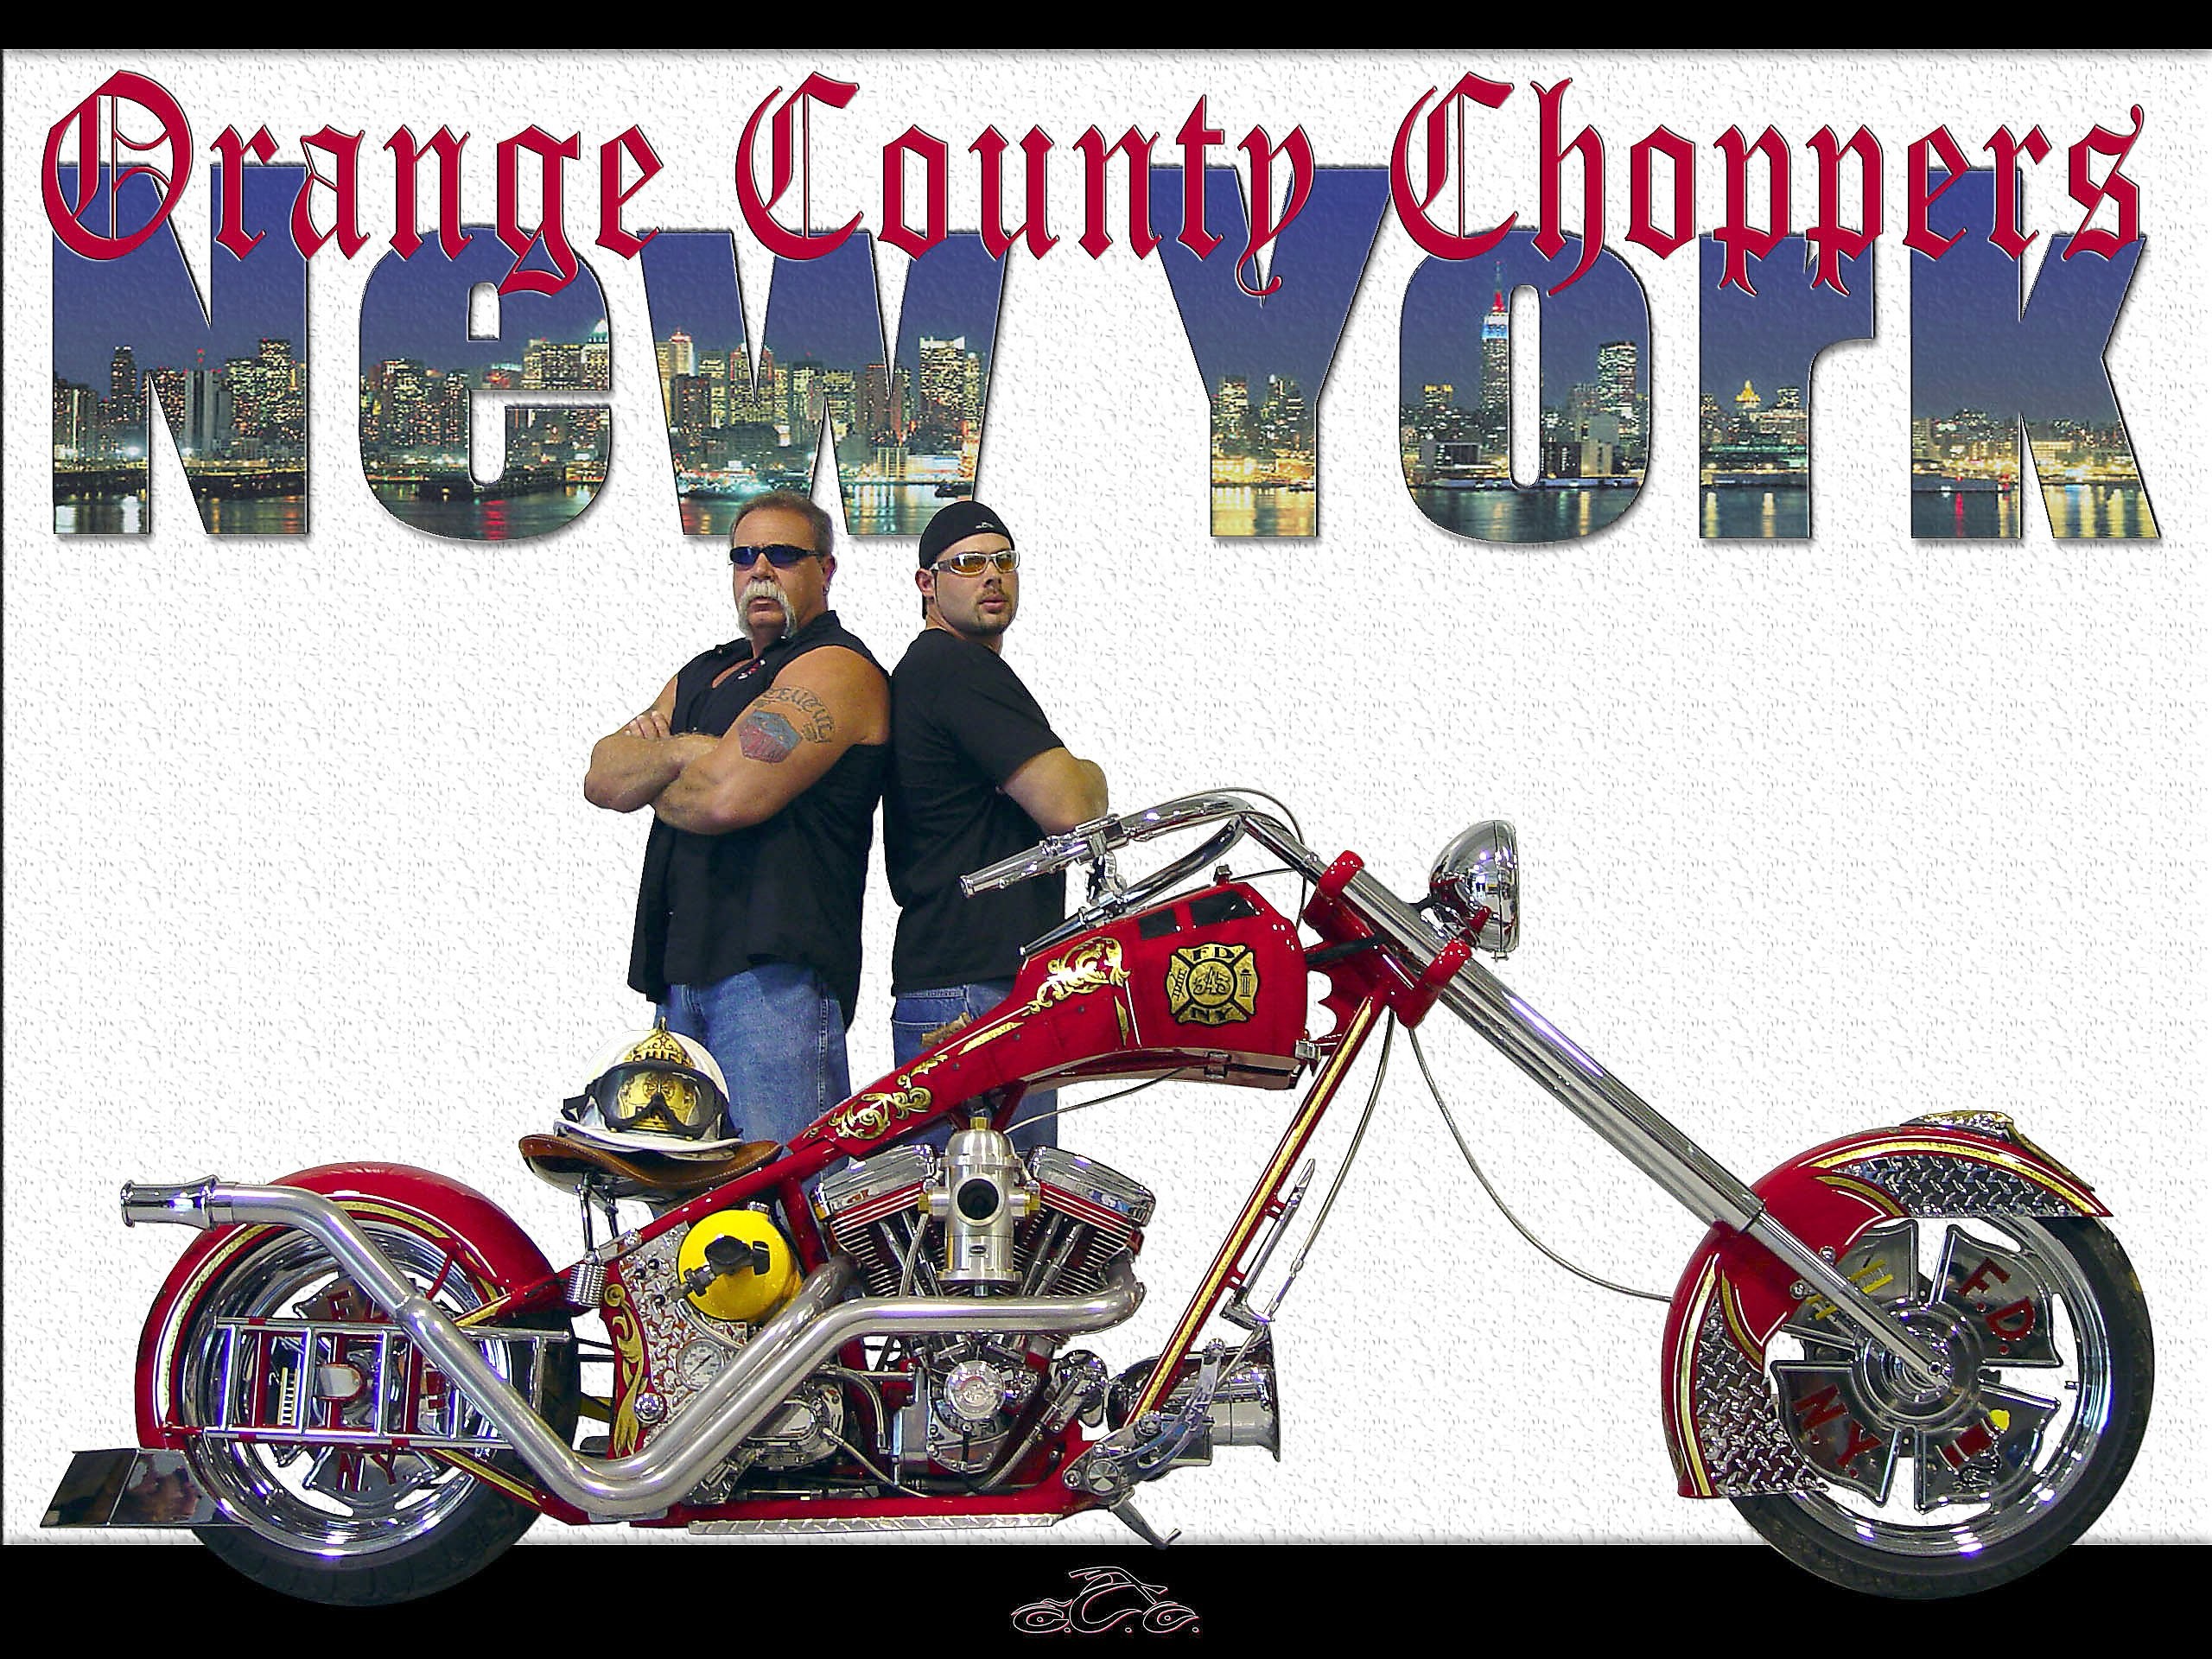 2560x1920 ORANGE COUNTY CHOPPERS occ custom chopper hot rod rods bike motorbike  motorcycle american poster wallpaper |  | 778068 | WallpaperUP